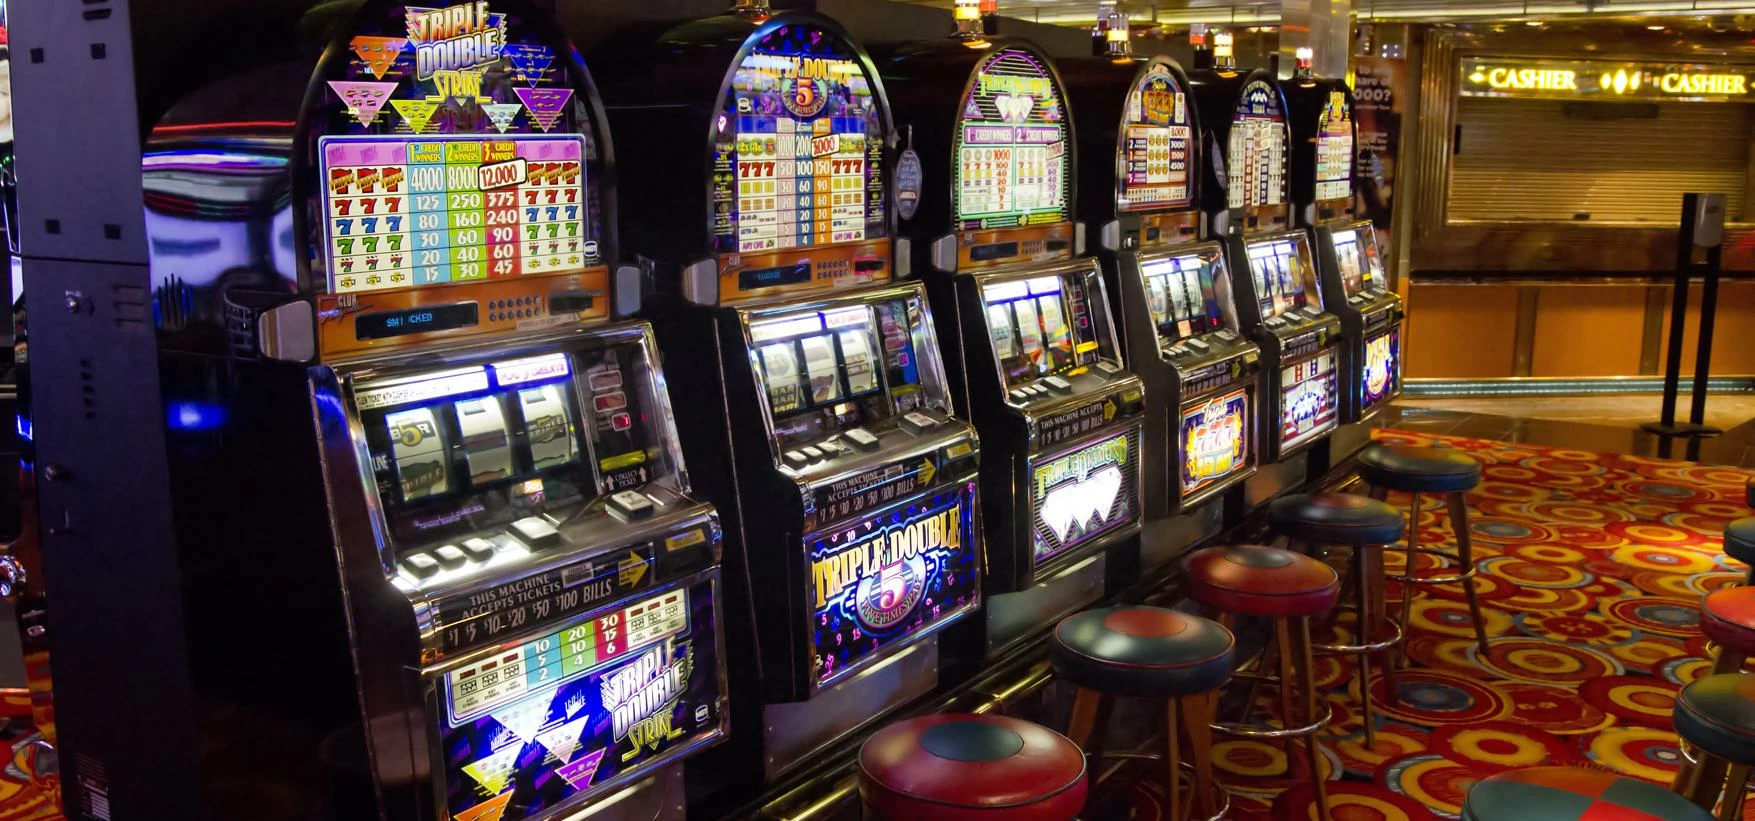 Royal Caribbean Grandeur of the Seas cruise ship casino slot machines